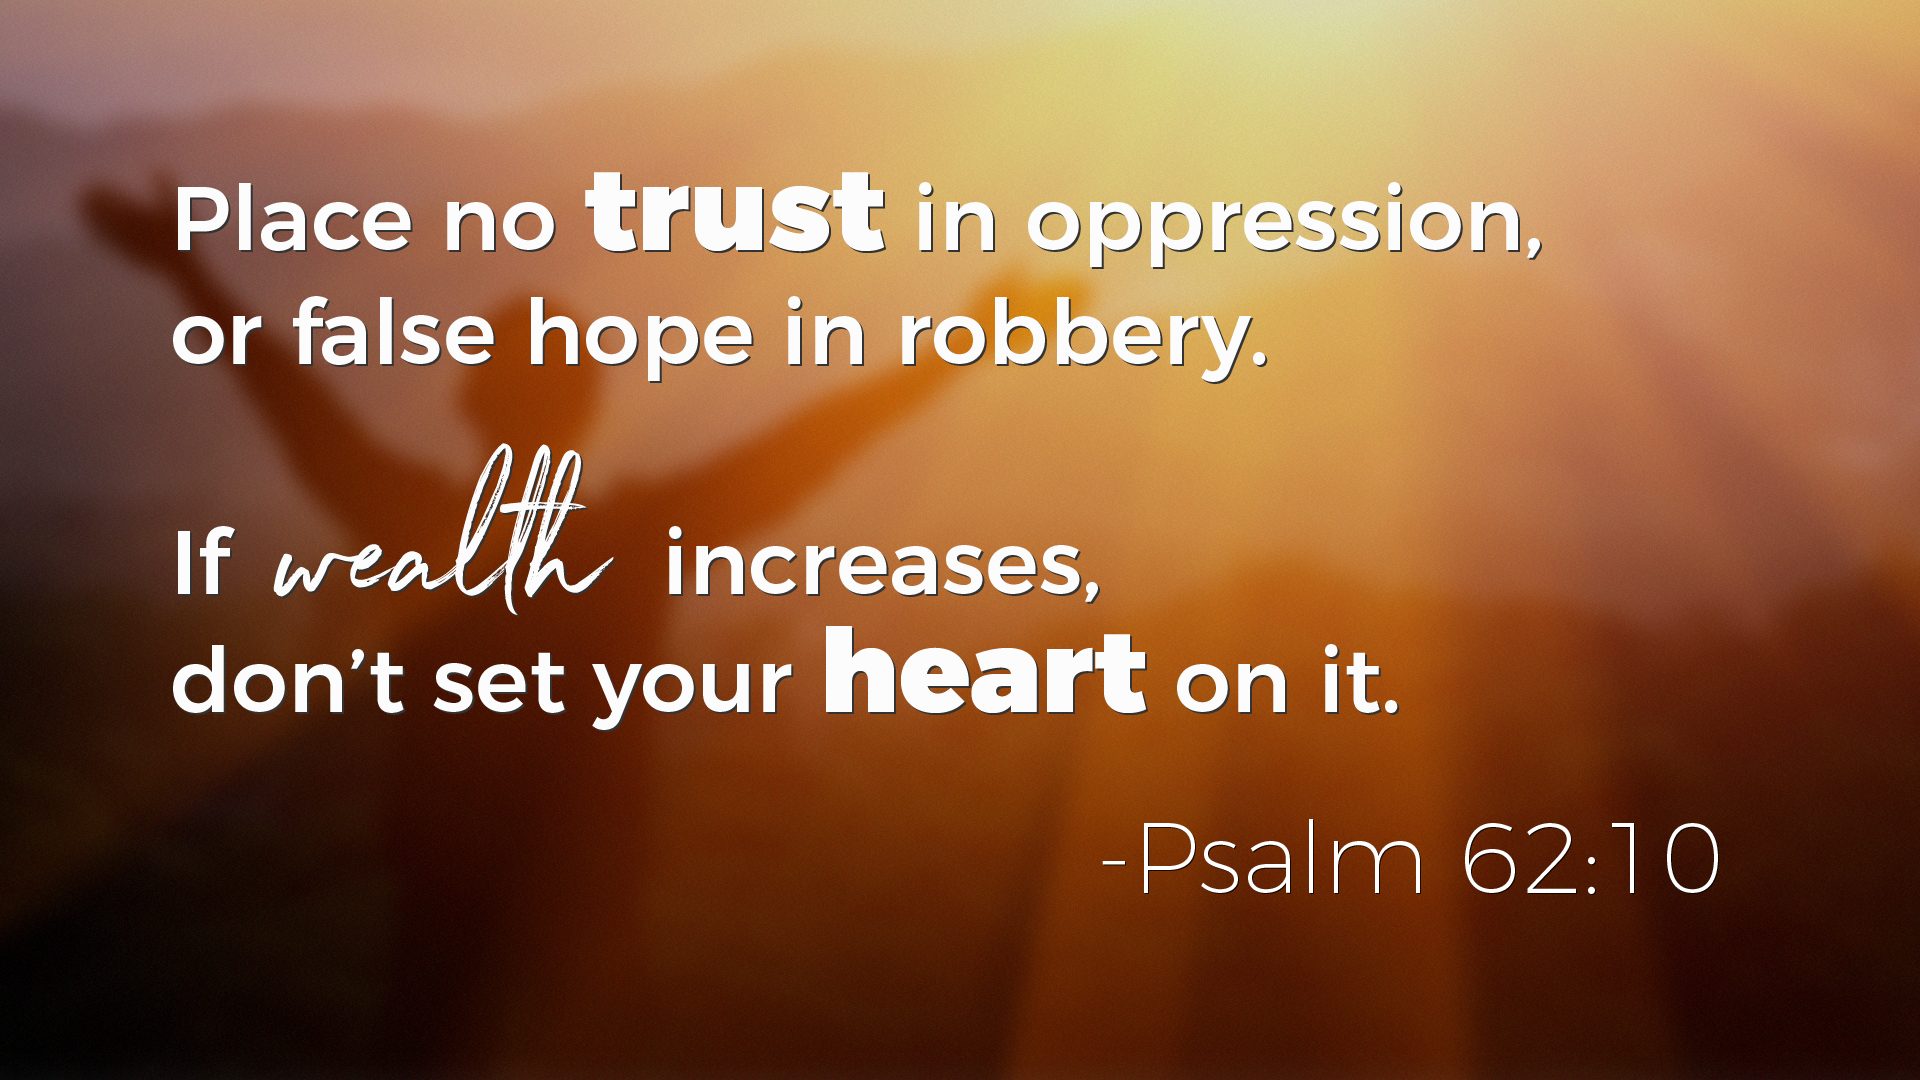 Psalms on Wealth - Psalm 62:10